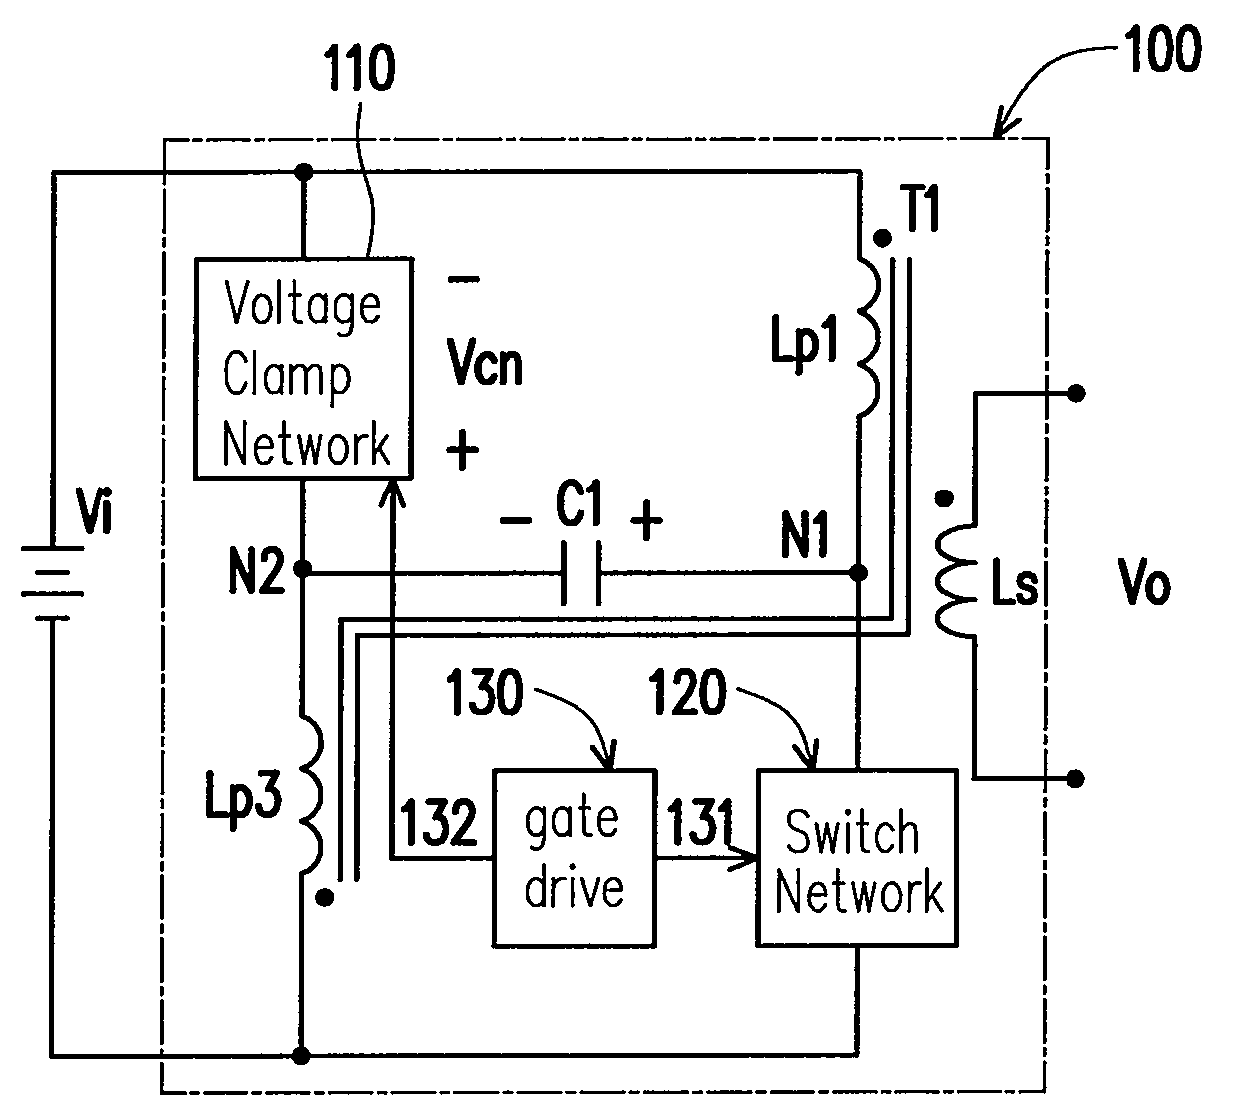 Voltage-clamp power converters